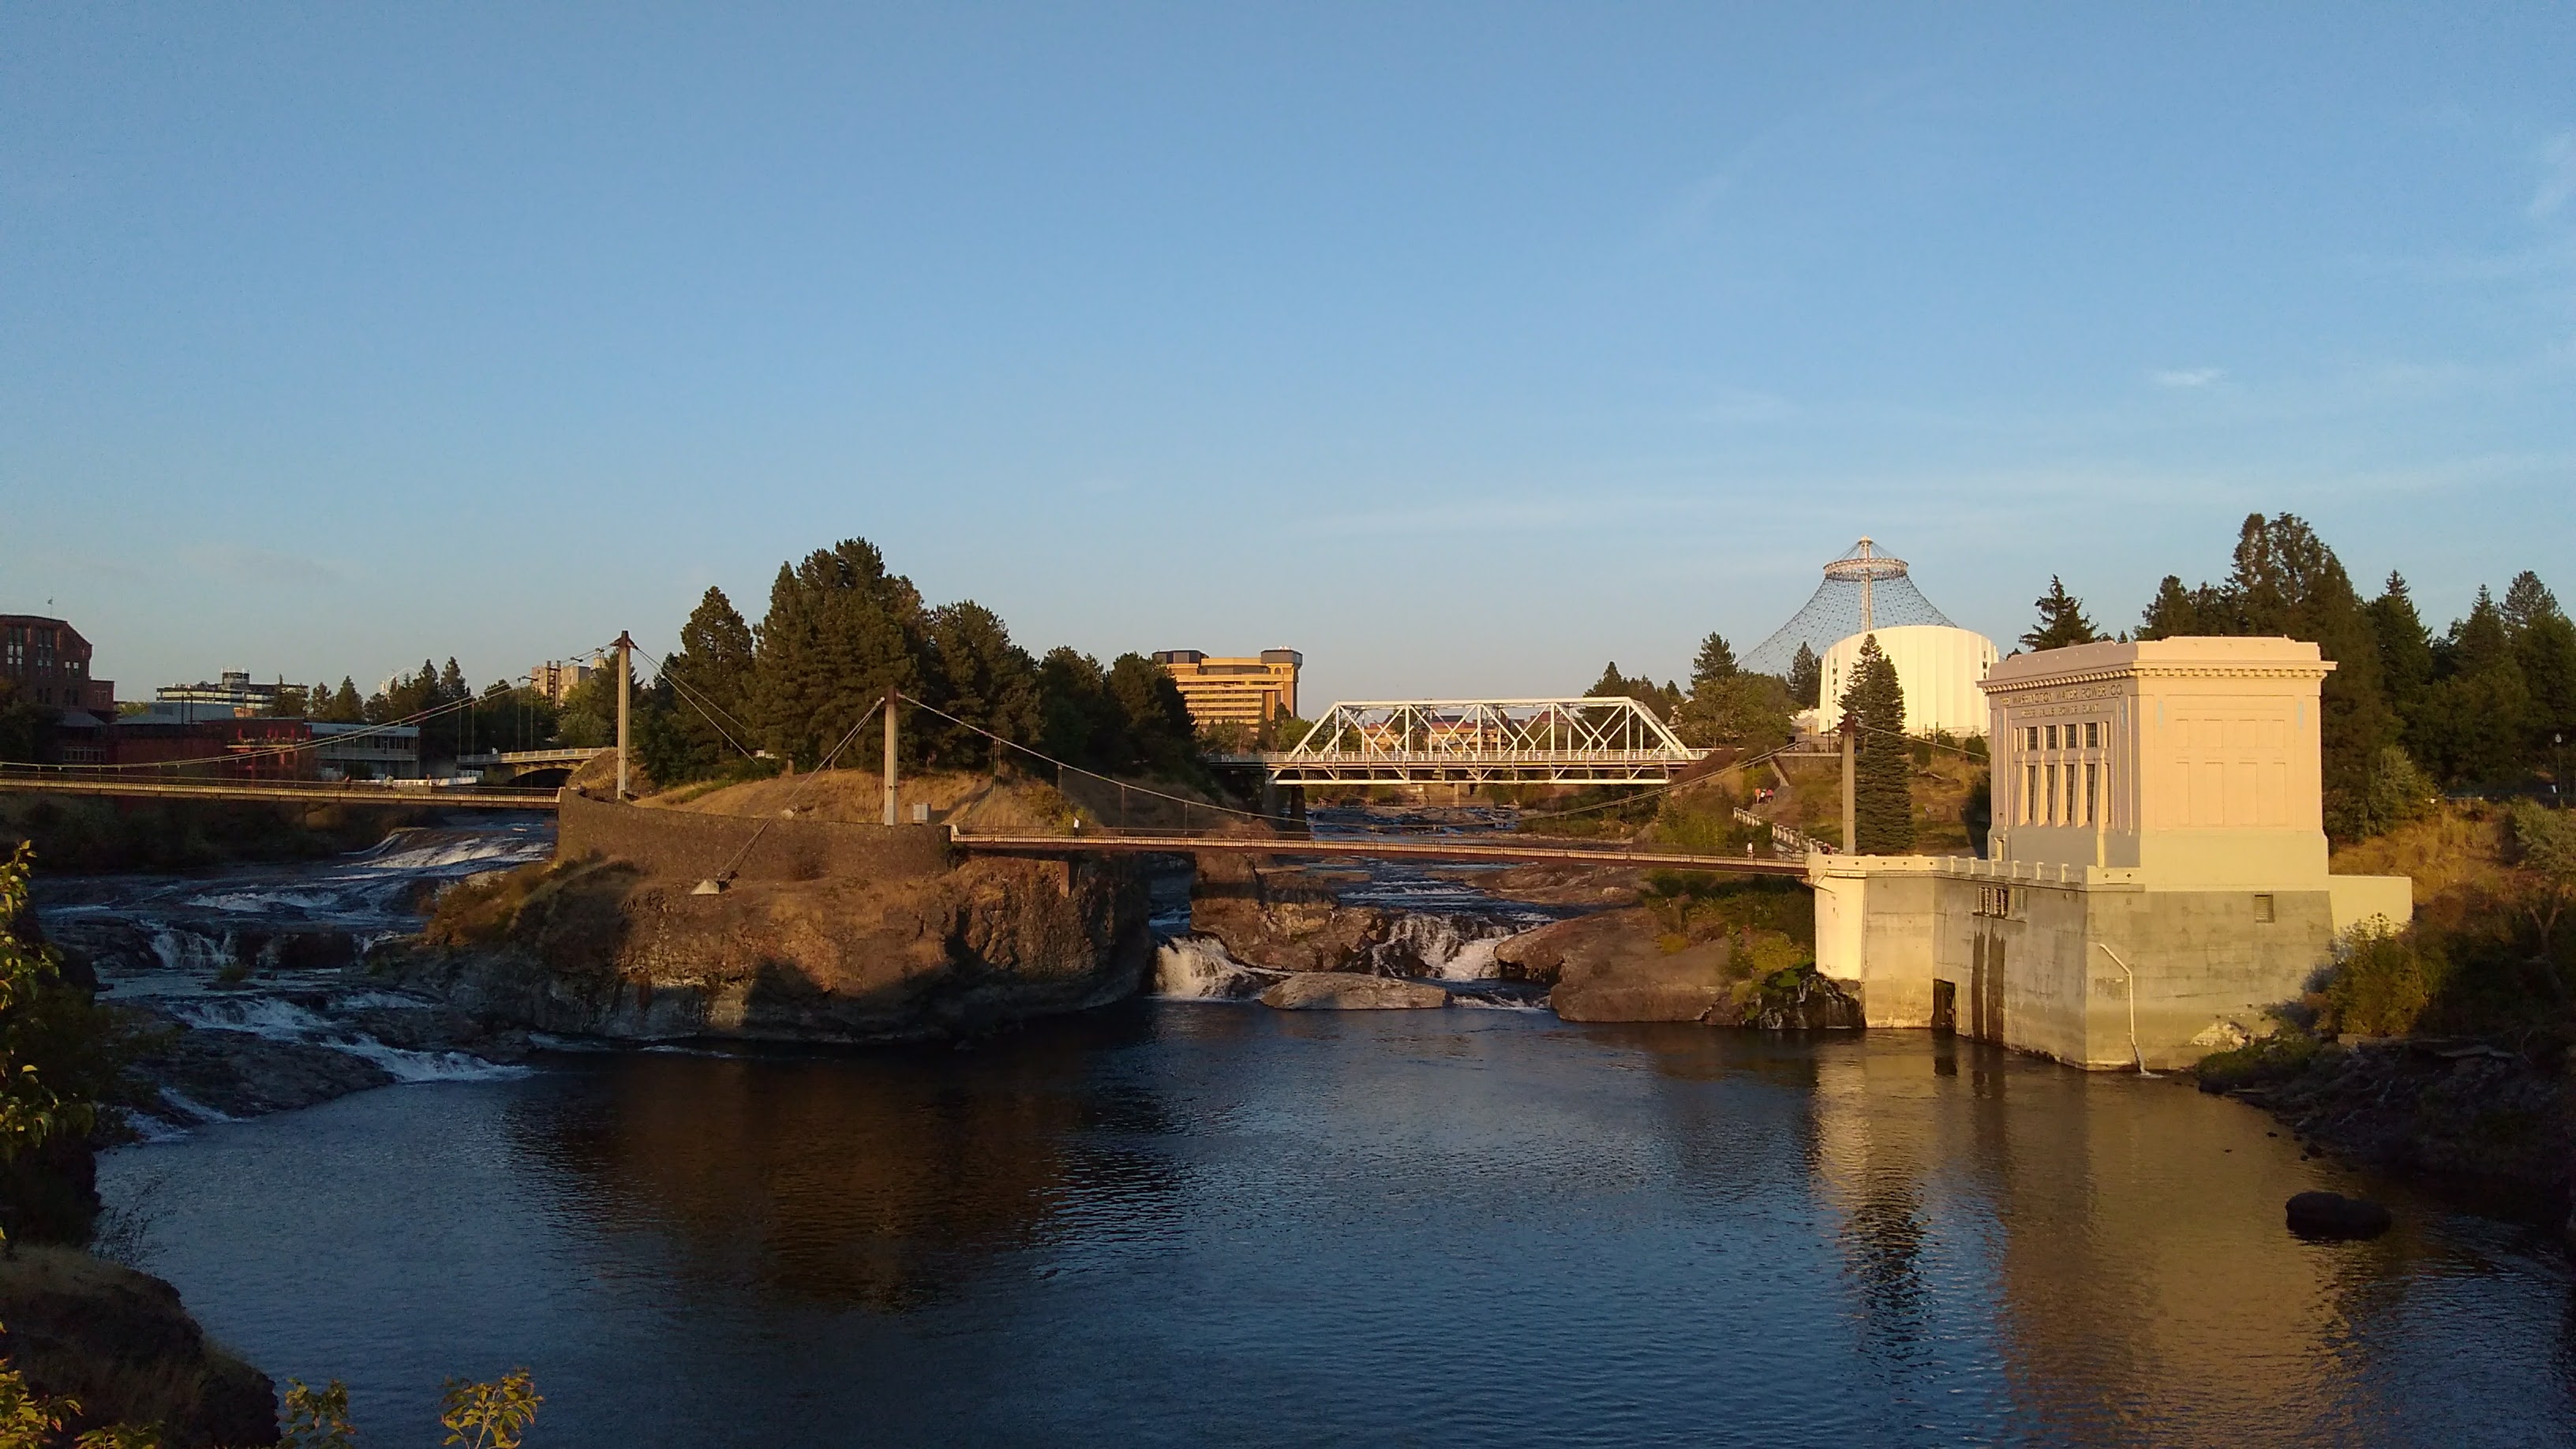 Scenic view of Spokane waterfall and bridges